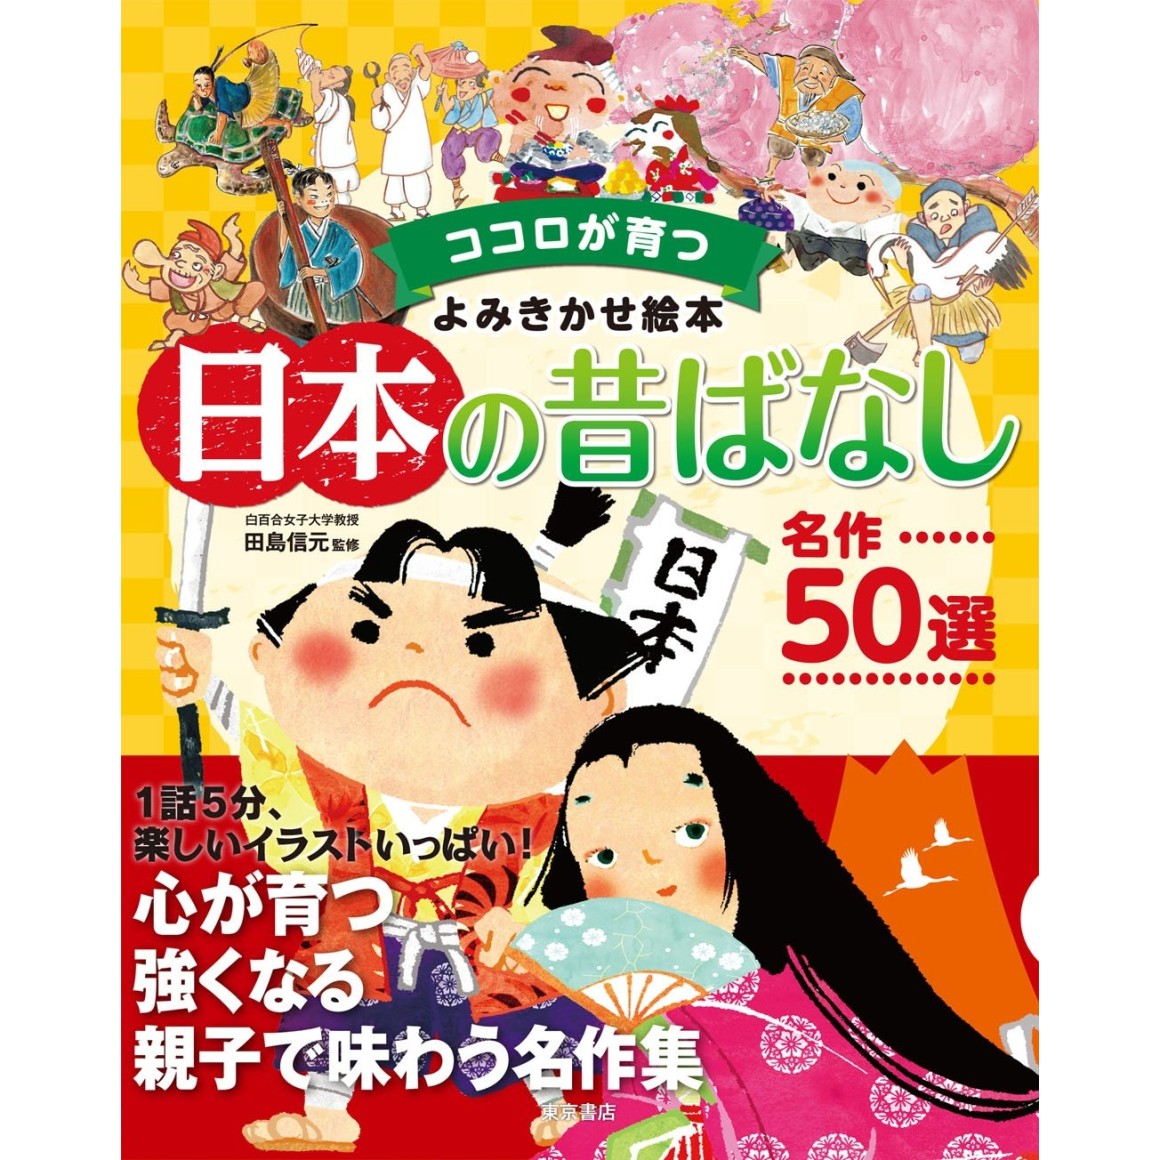 Tensei Shitara Slime Datta Ken vol. 1 - Edição Japonesa (GC Novels